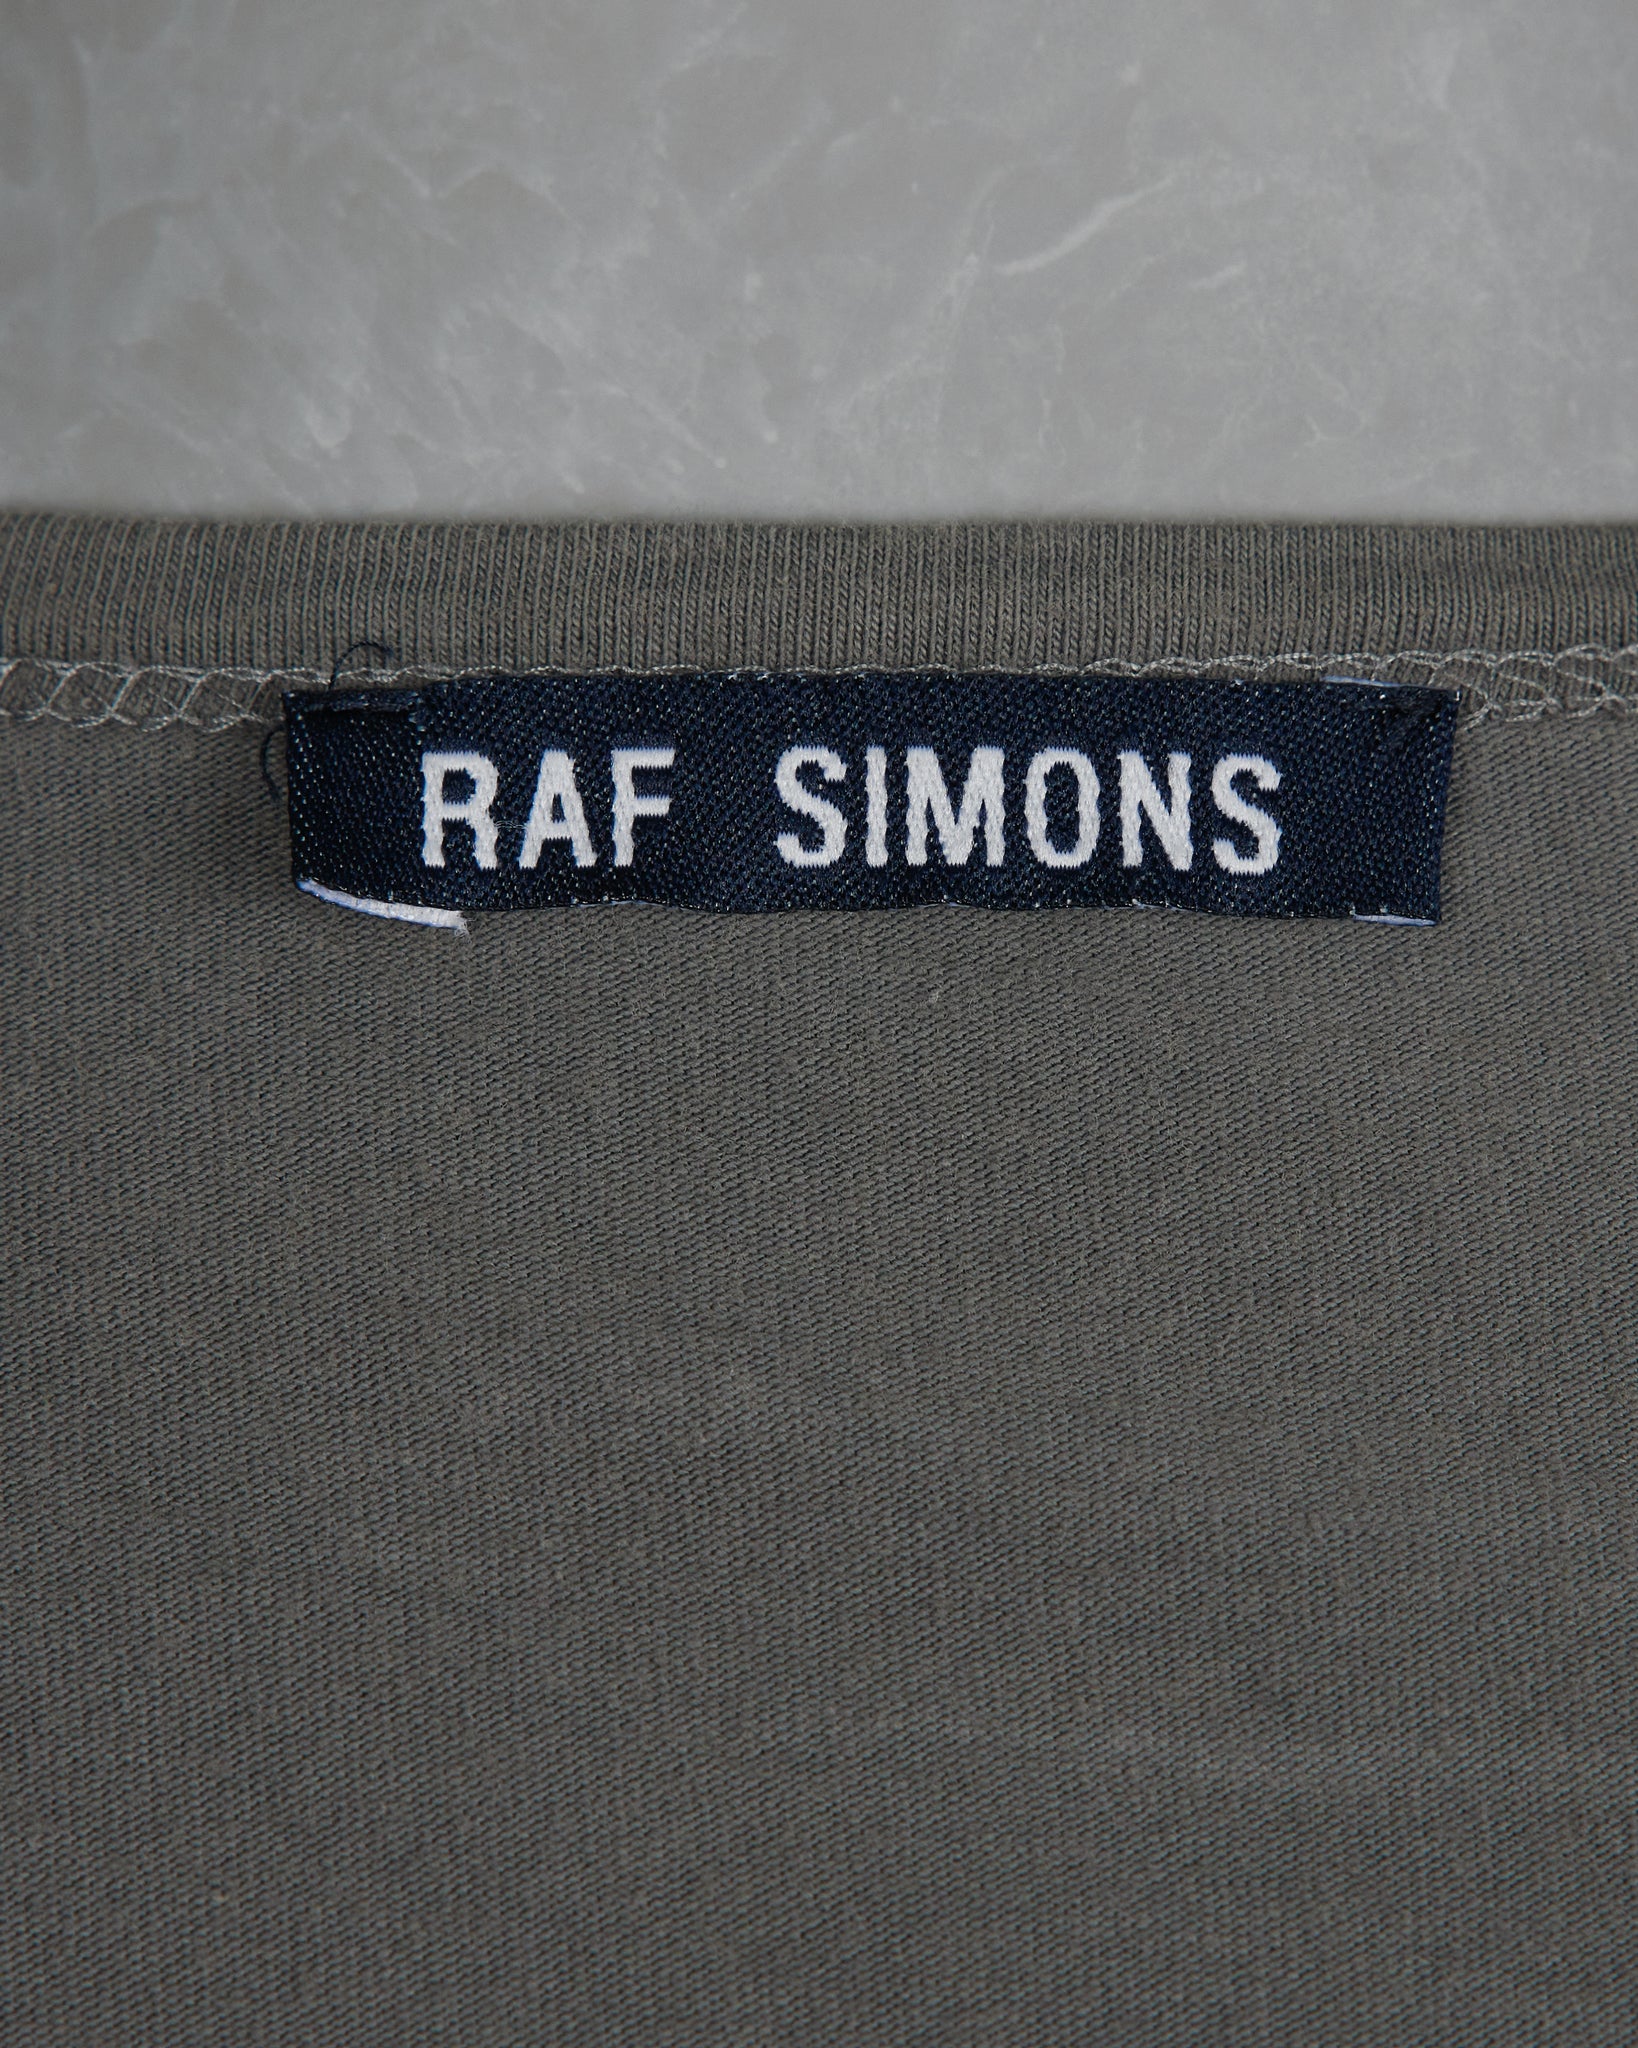 Raf Simons "Eater" Long Sleeve T-Shirt tag